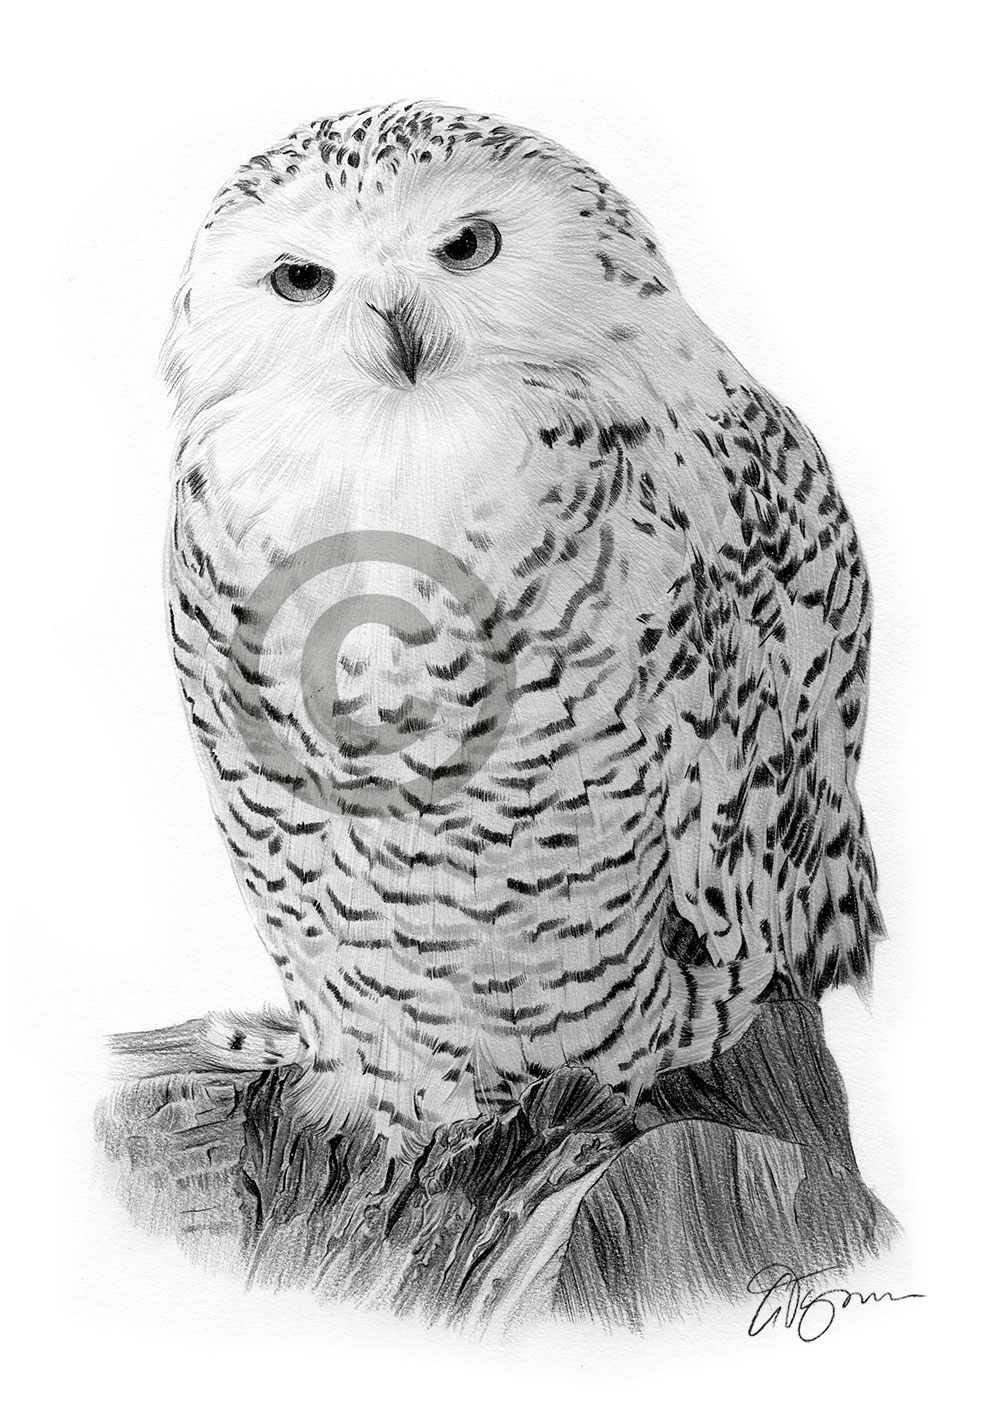 Pencil drawing of a snowy owl by UK artist Gary Tymon